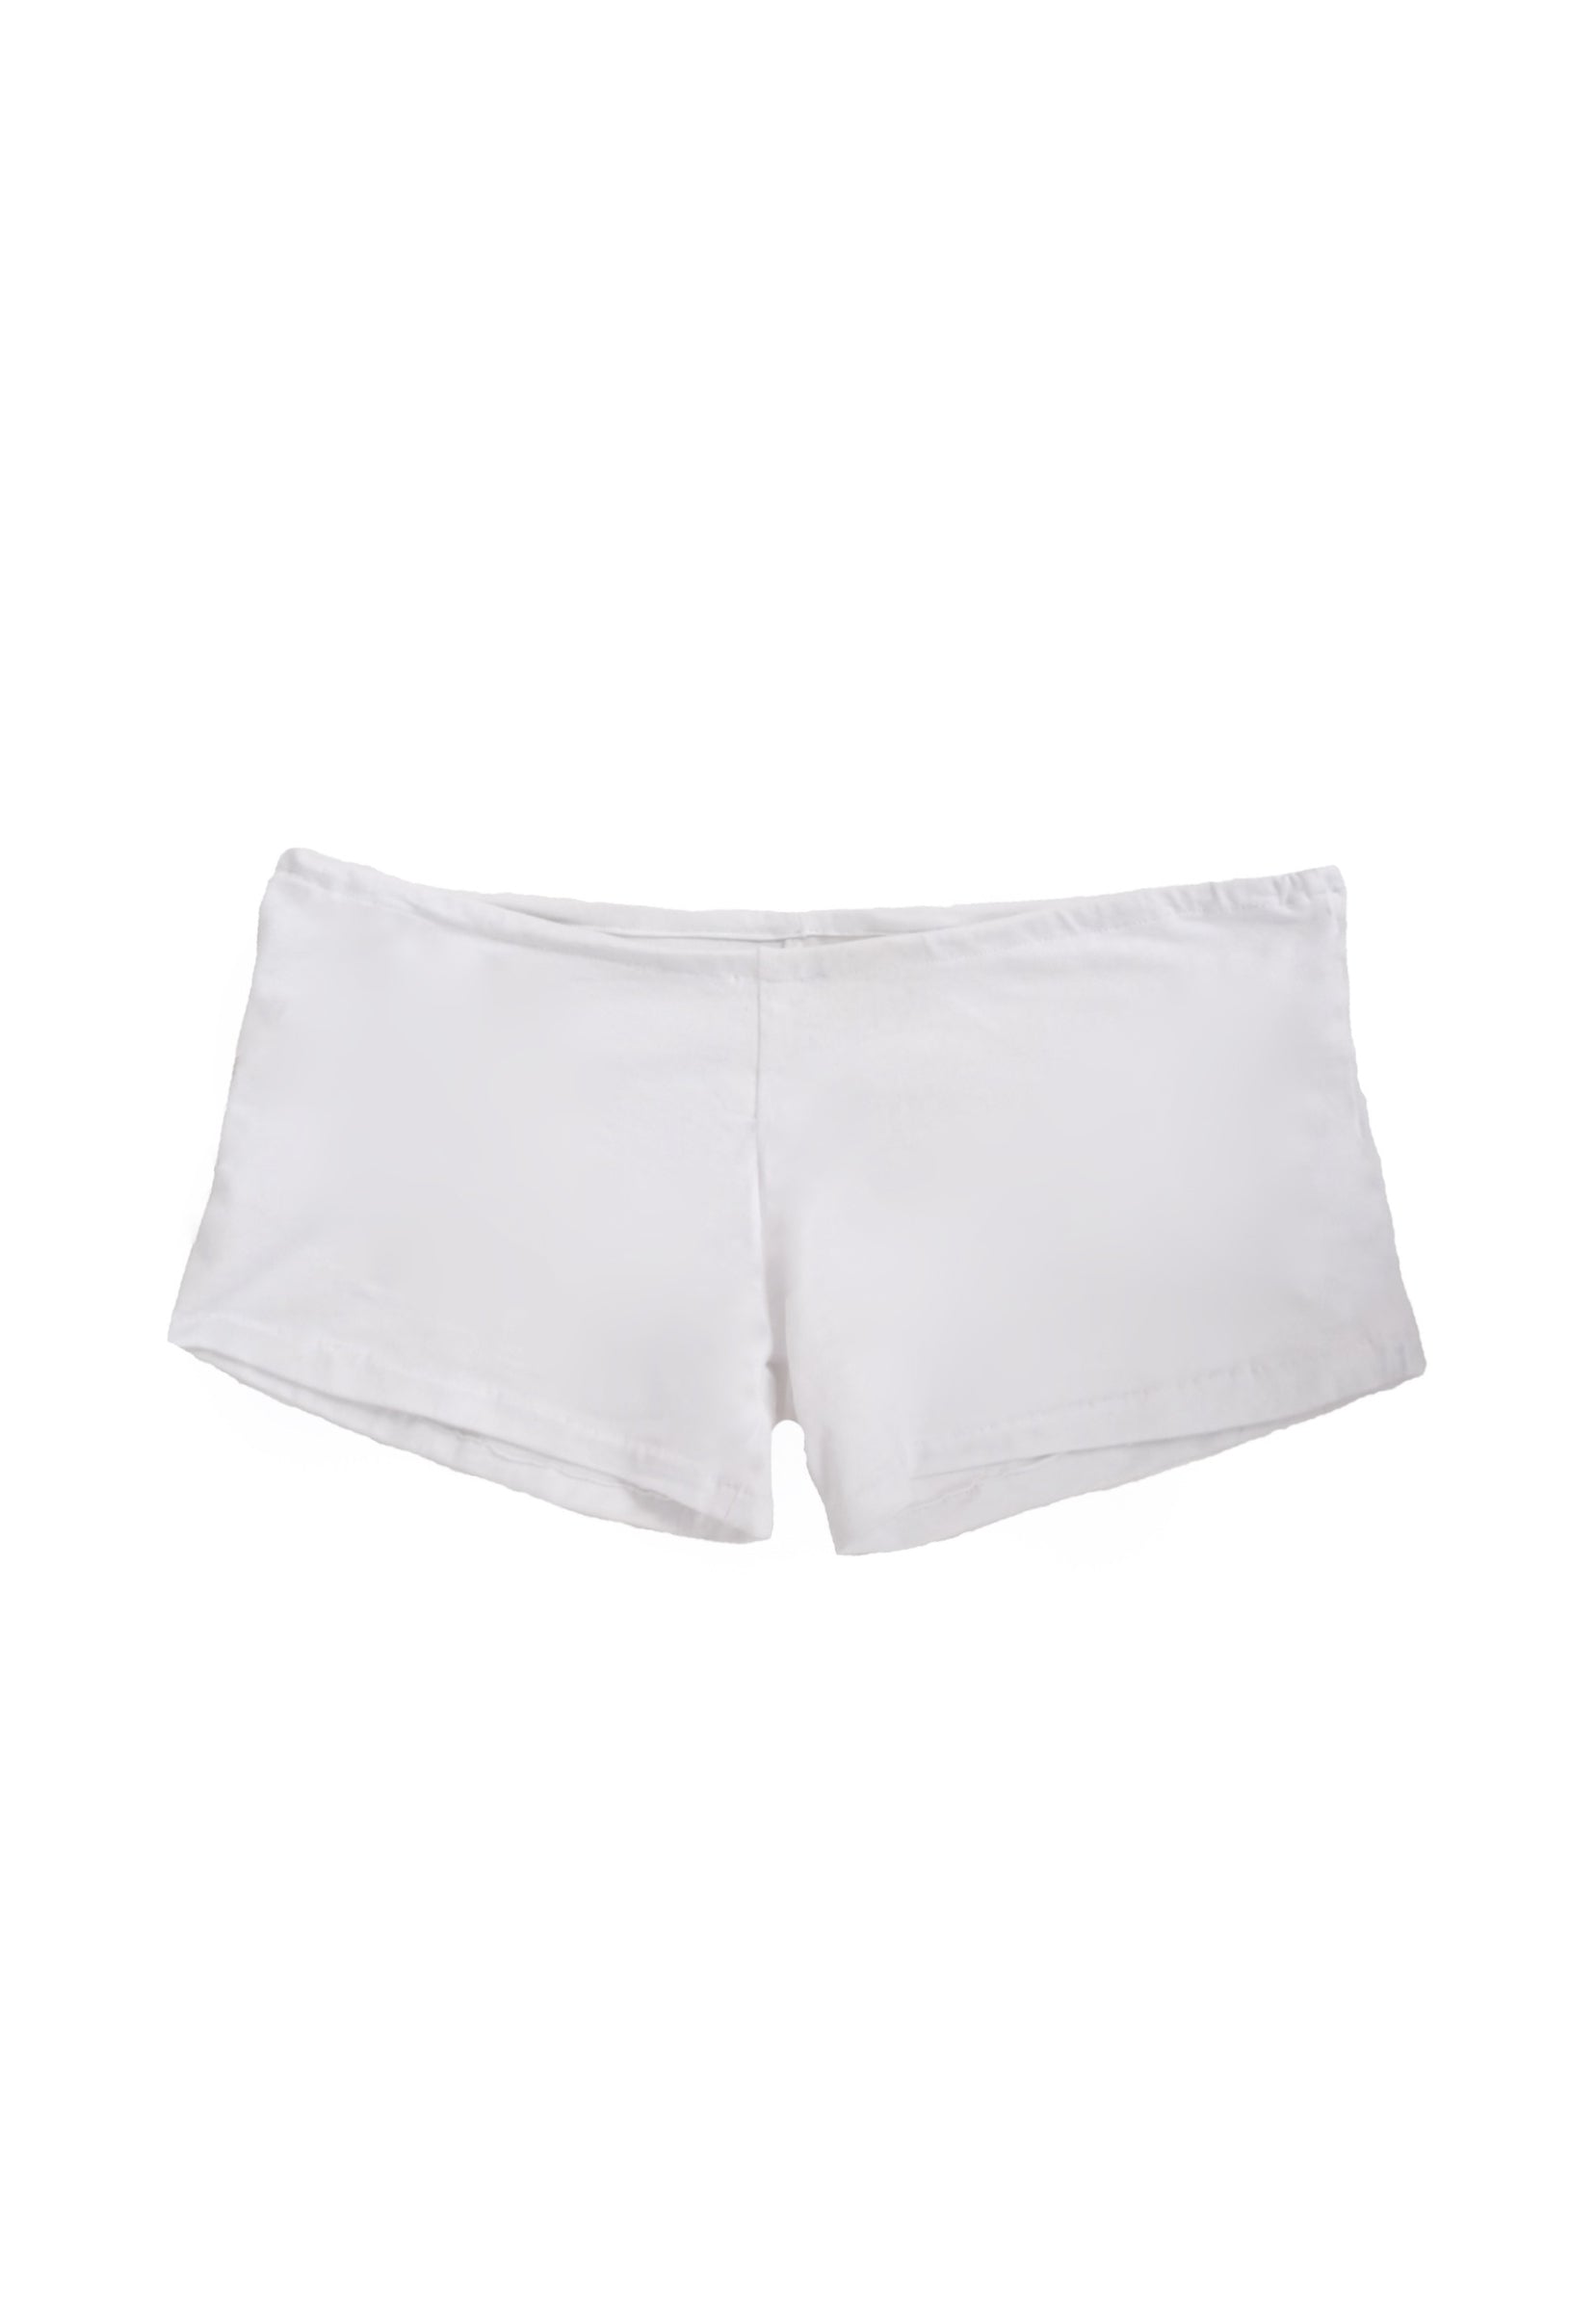 Starlet Micro Shorts (XS-1X)